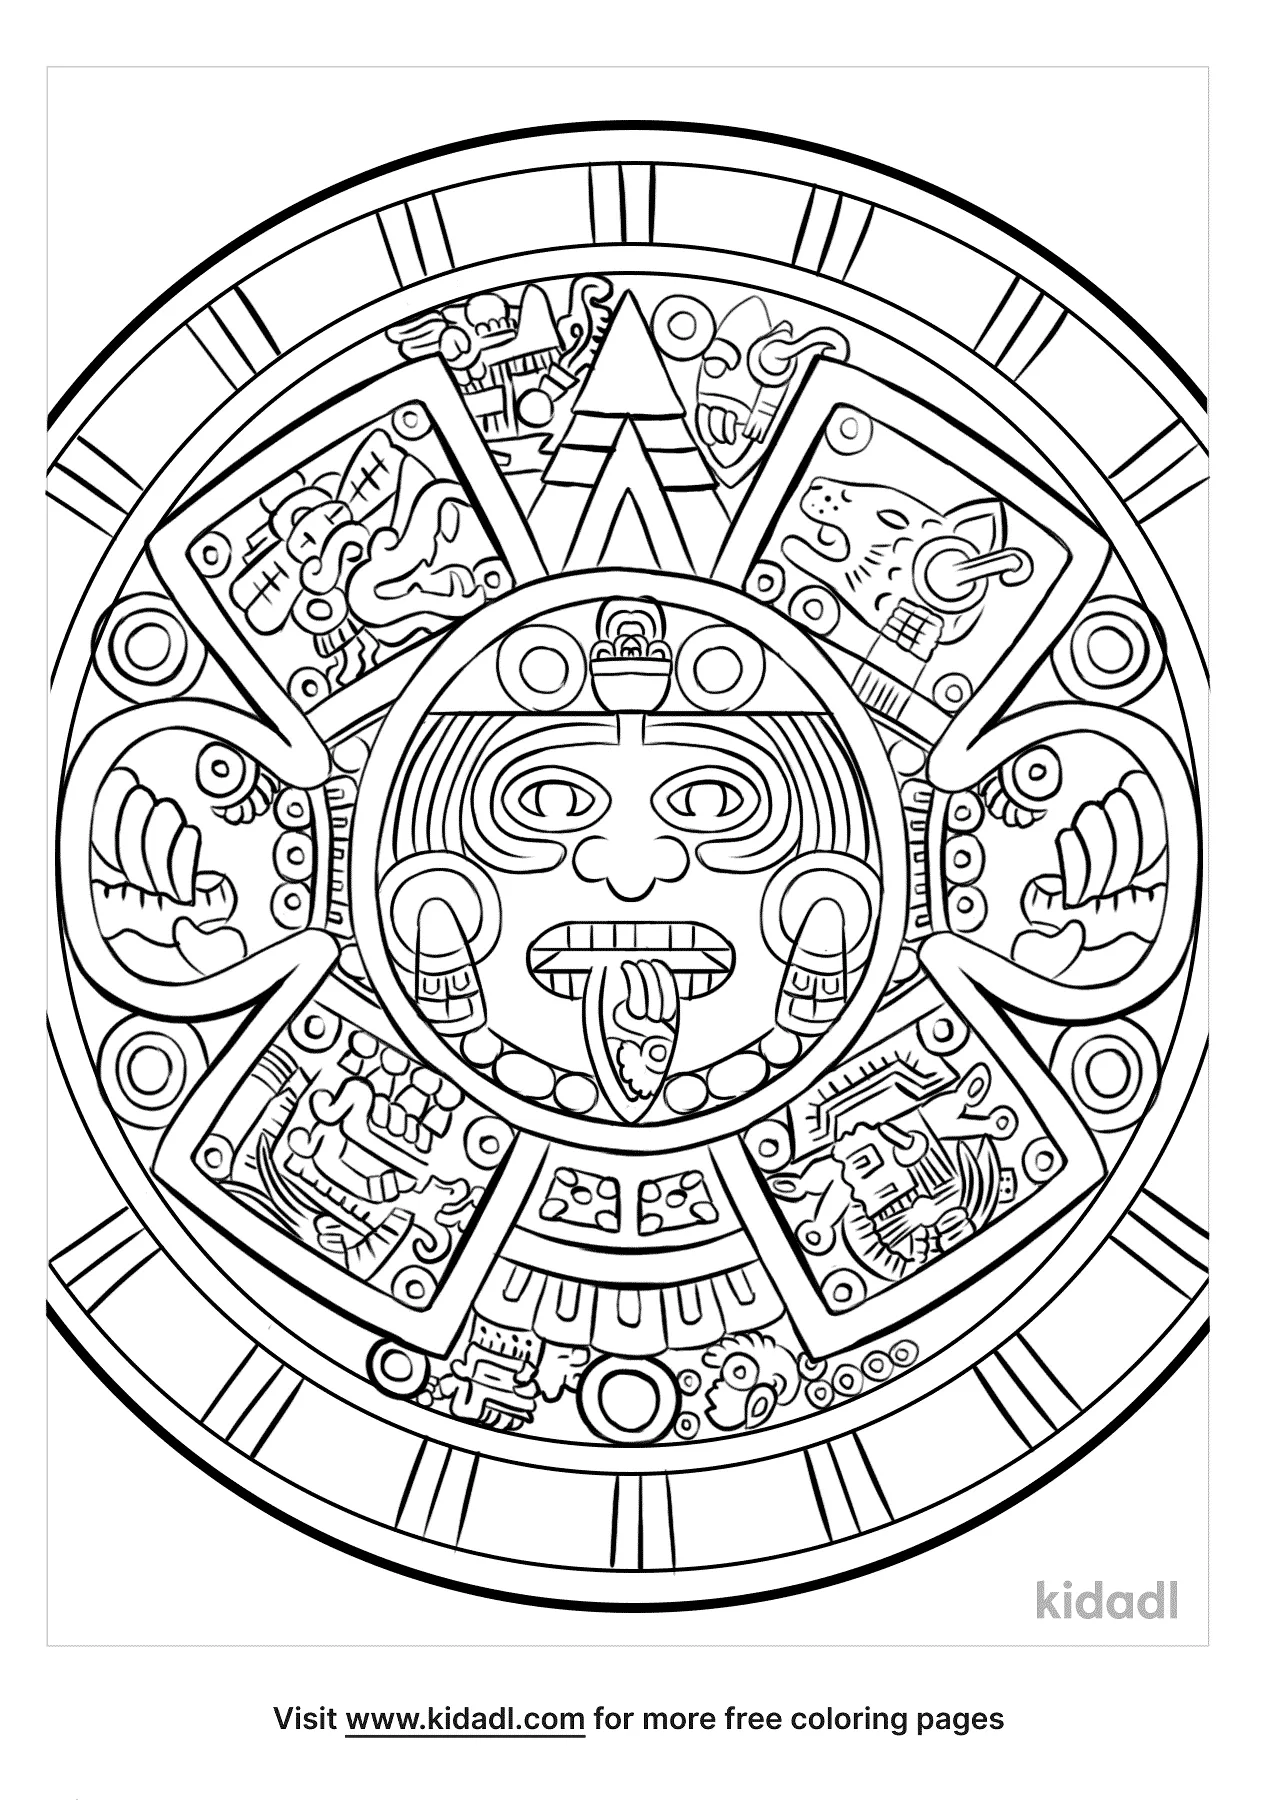 aztec-calendar-coloring-page-17-aztecs-coloring-pages-free